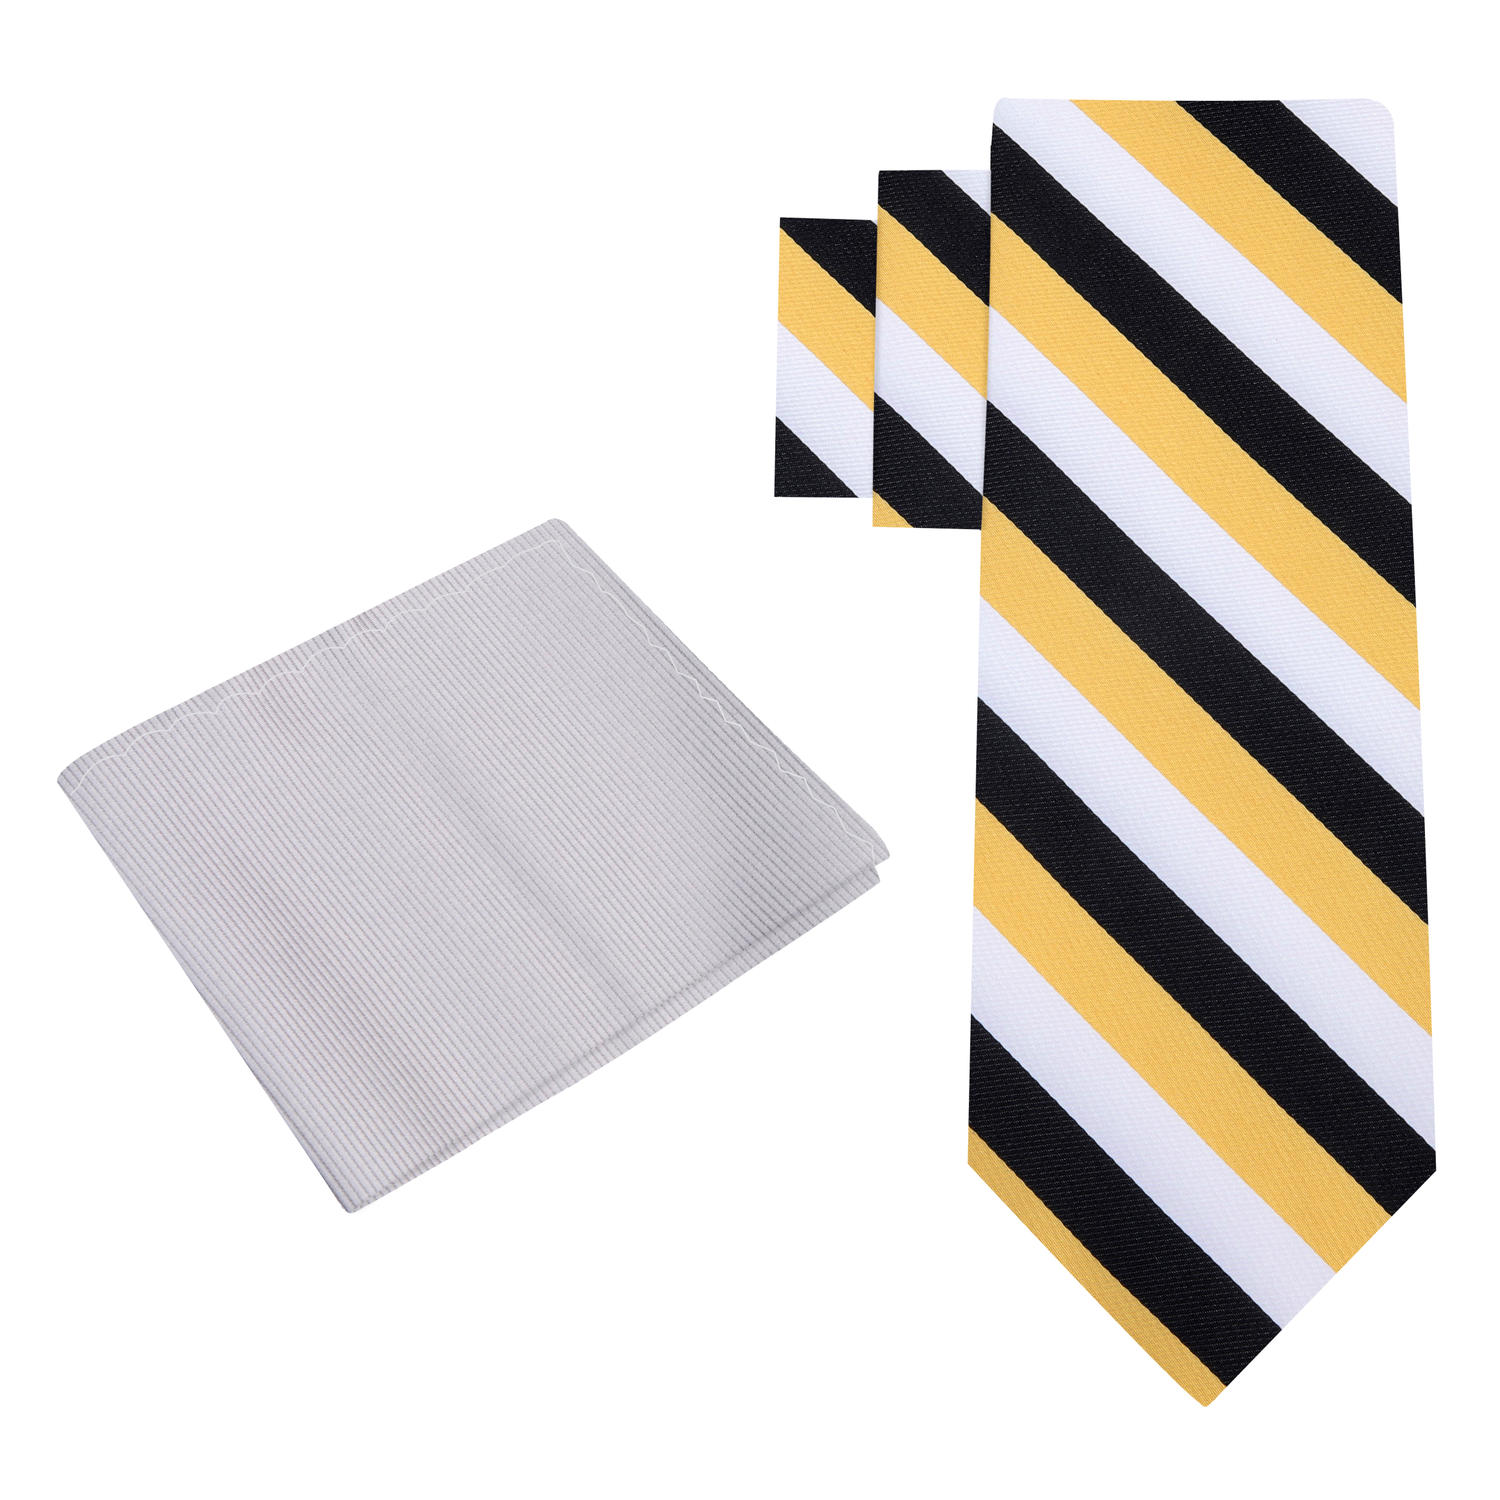 Alt View Tie: Gold, White, Black Stripe Tie and Grey Square